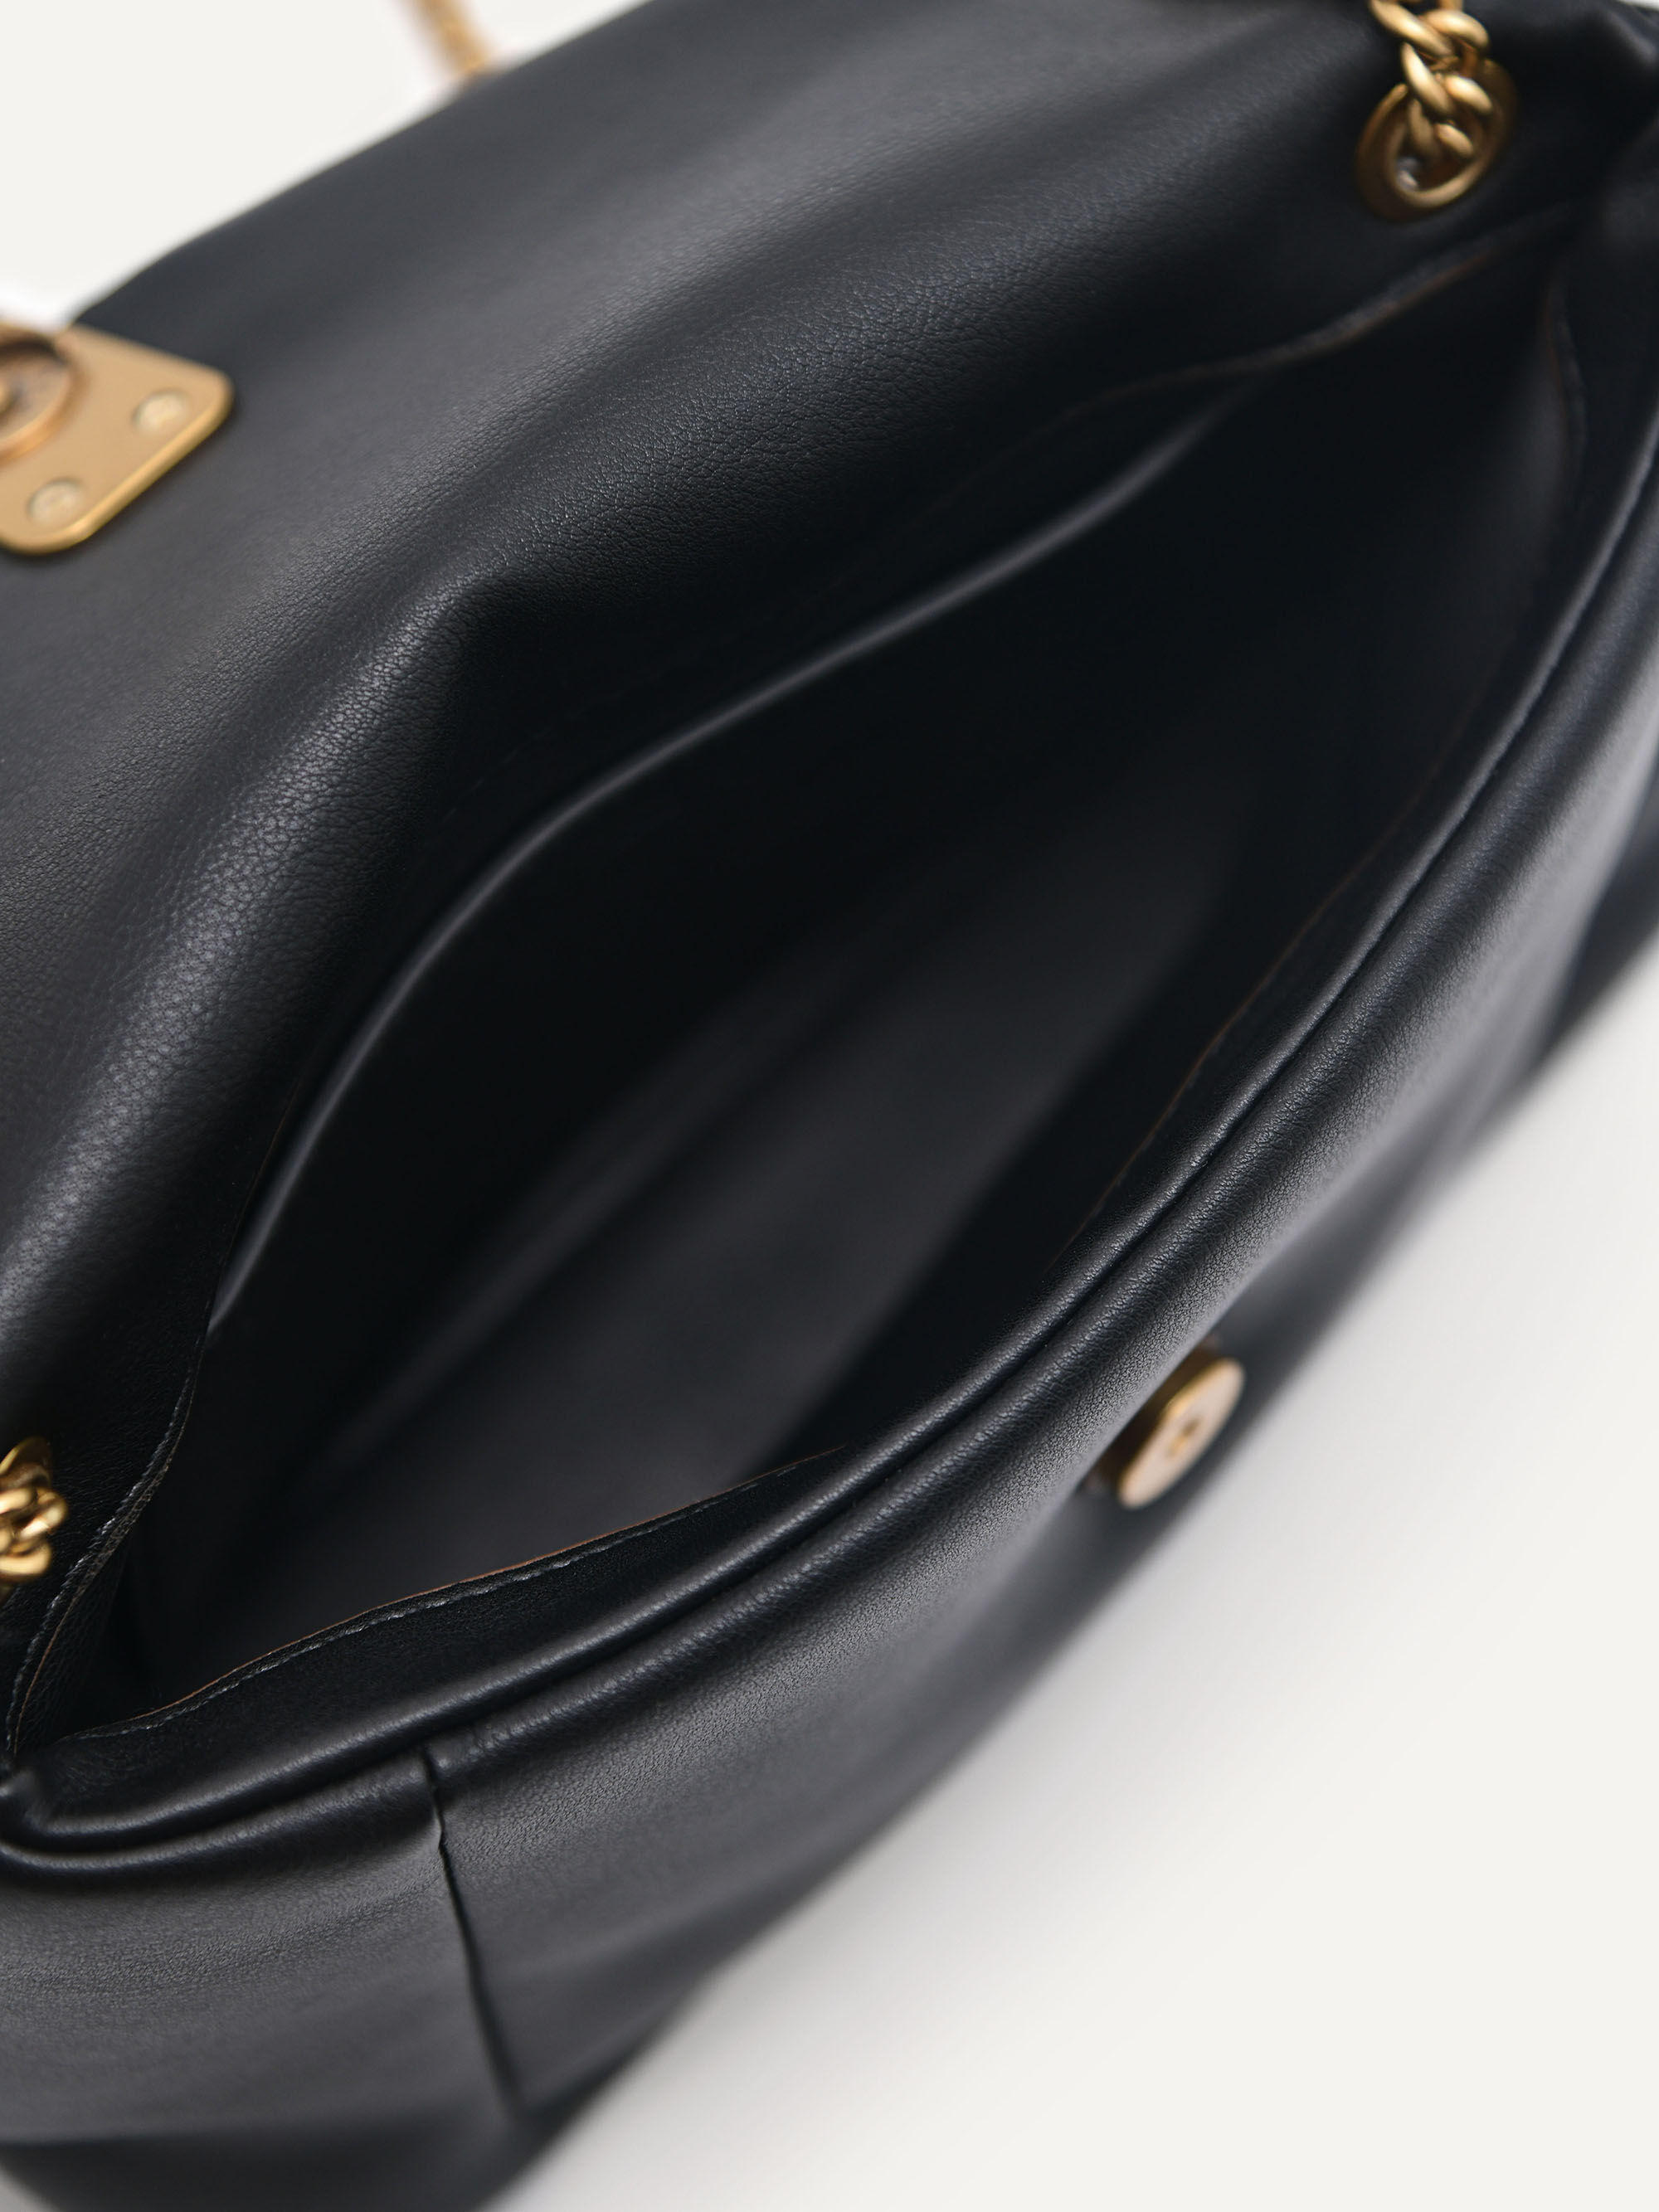 Pinto Black Shoulder Bag | PEDRO